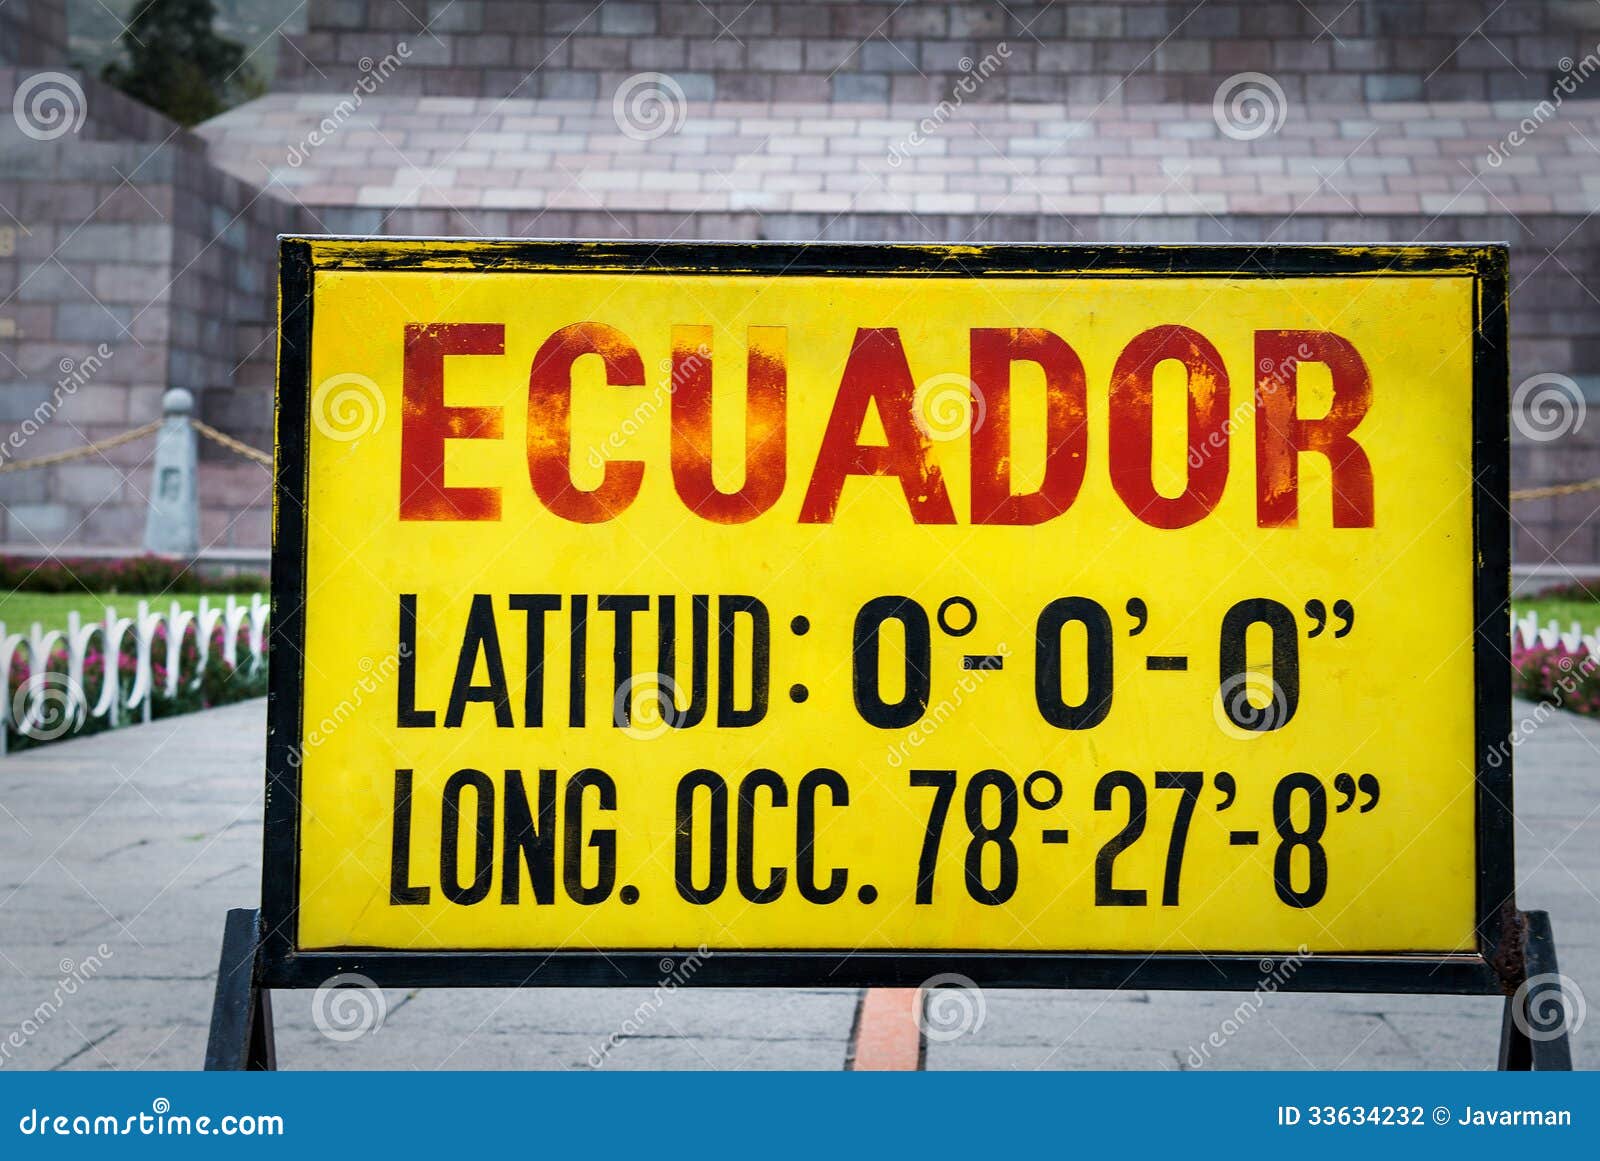 zero latitude sign at mitad del mundo, ecuador